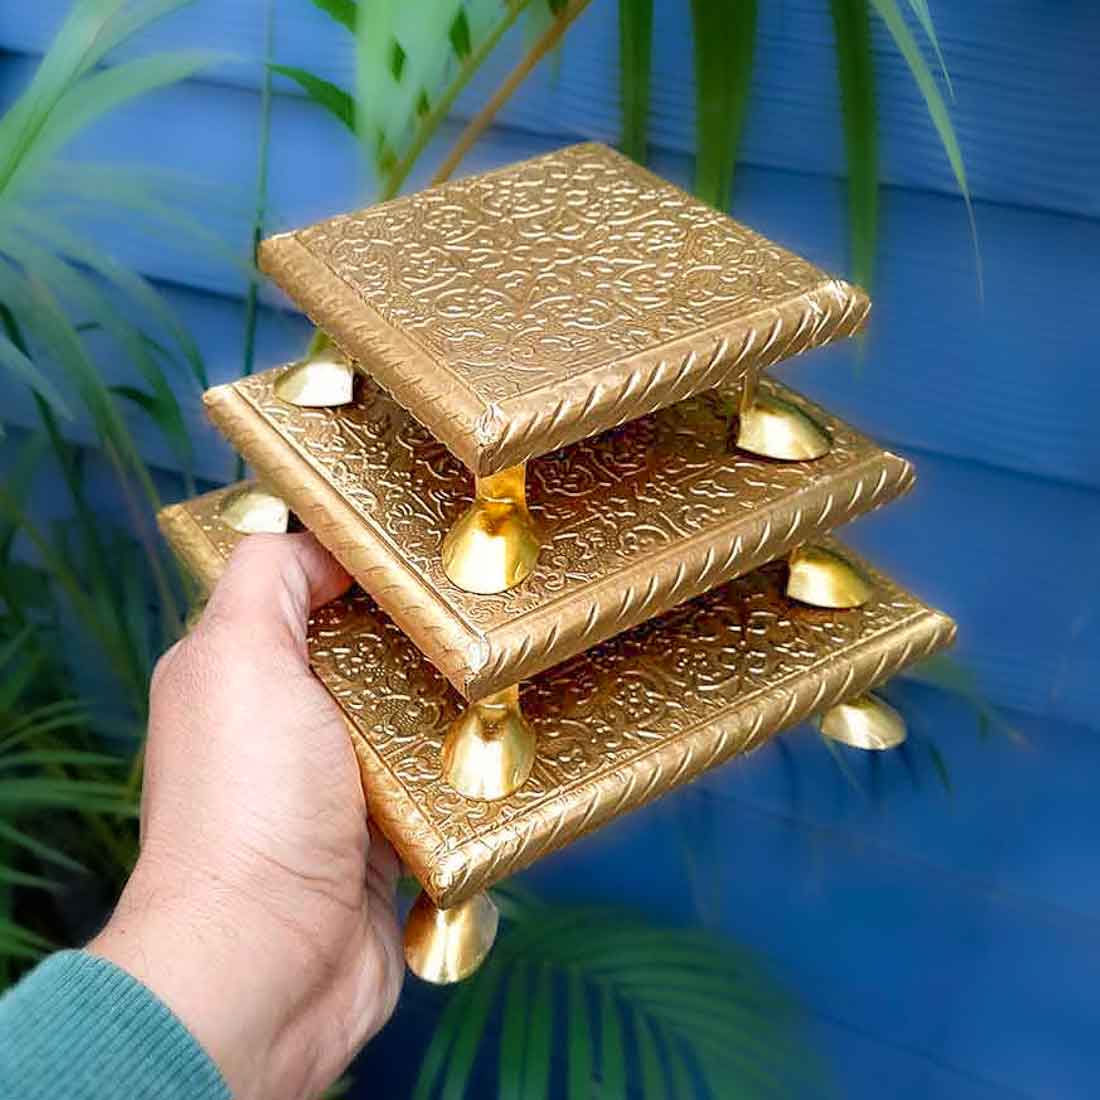 Brass Embellished Pooja Chowki - For Pooja, Weddings & Festivals - 4, 5 & 6 inch - Set of 3